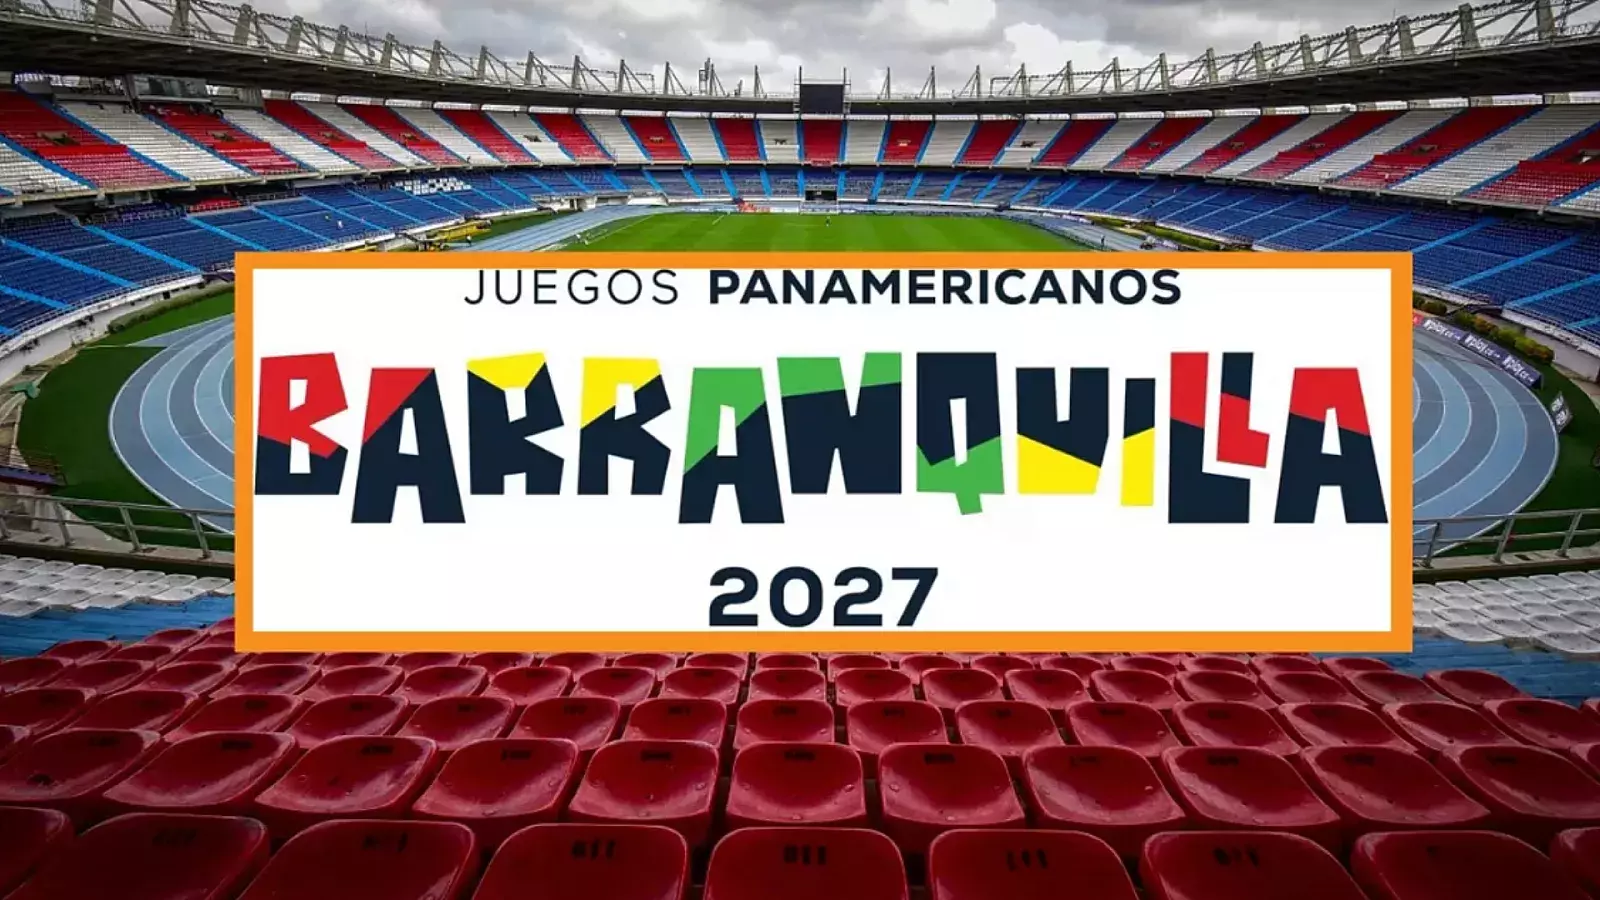 Barranquilla 2027